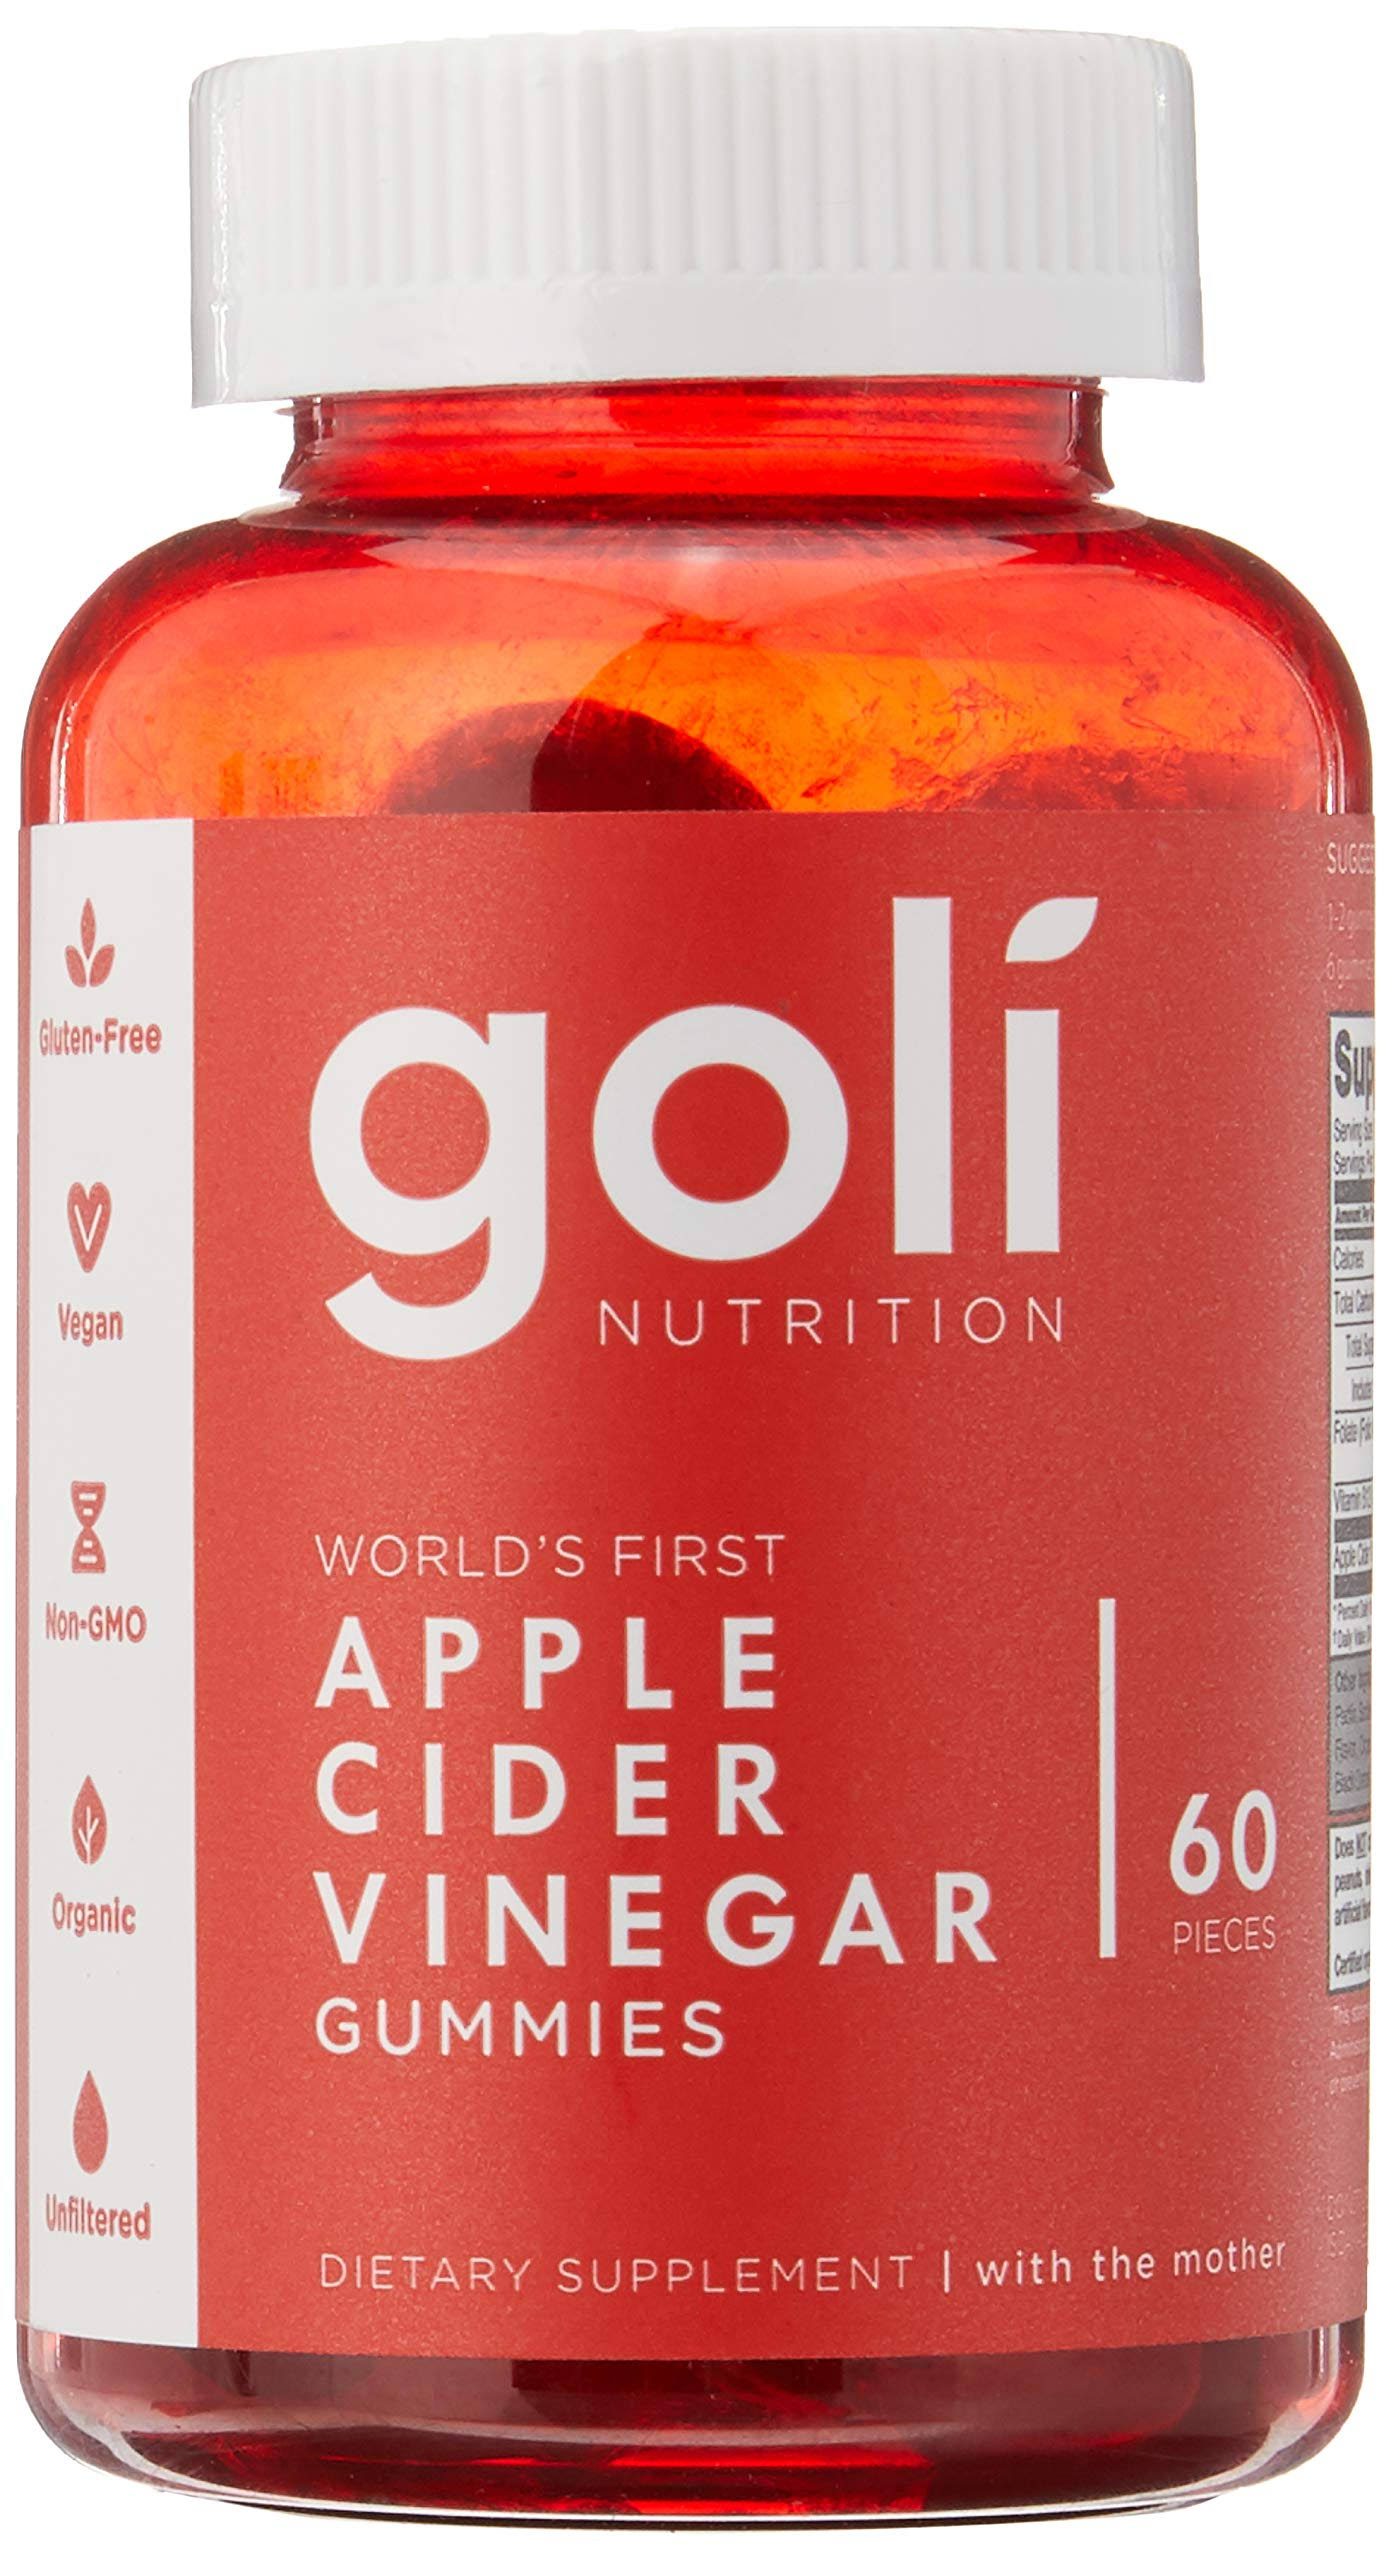 Goli Nutrition Apple Cider Vinegar Gummies 60 Pieces